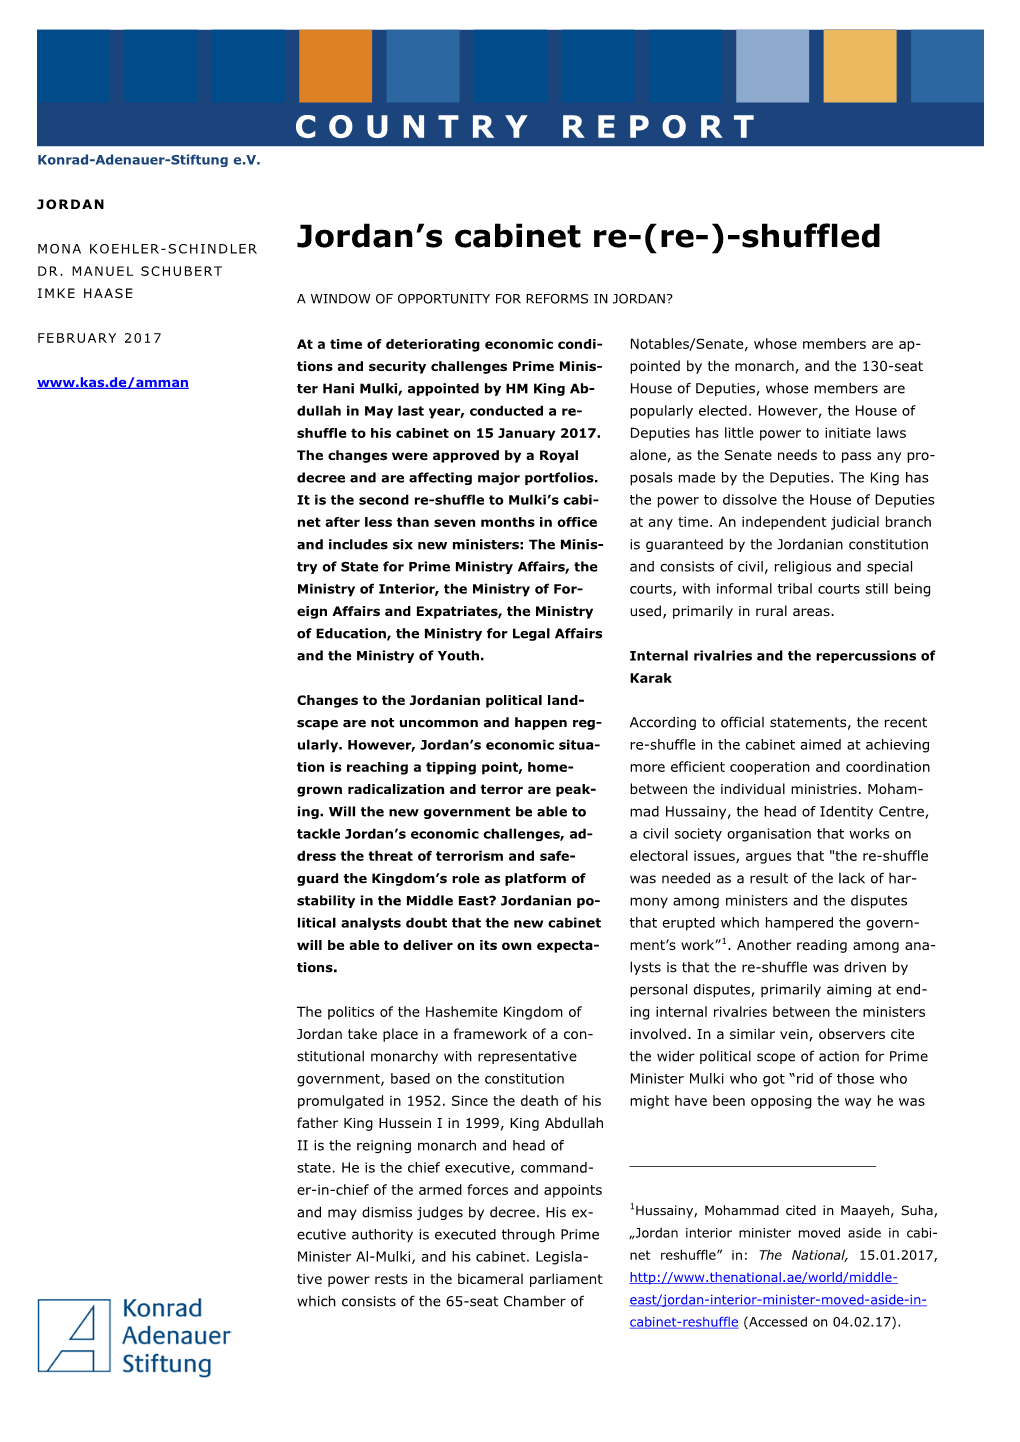 Jordan's Cabinet Re-Re-Shuffled